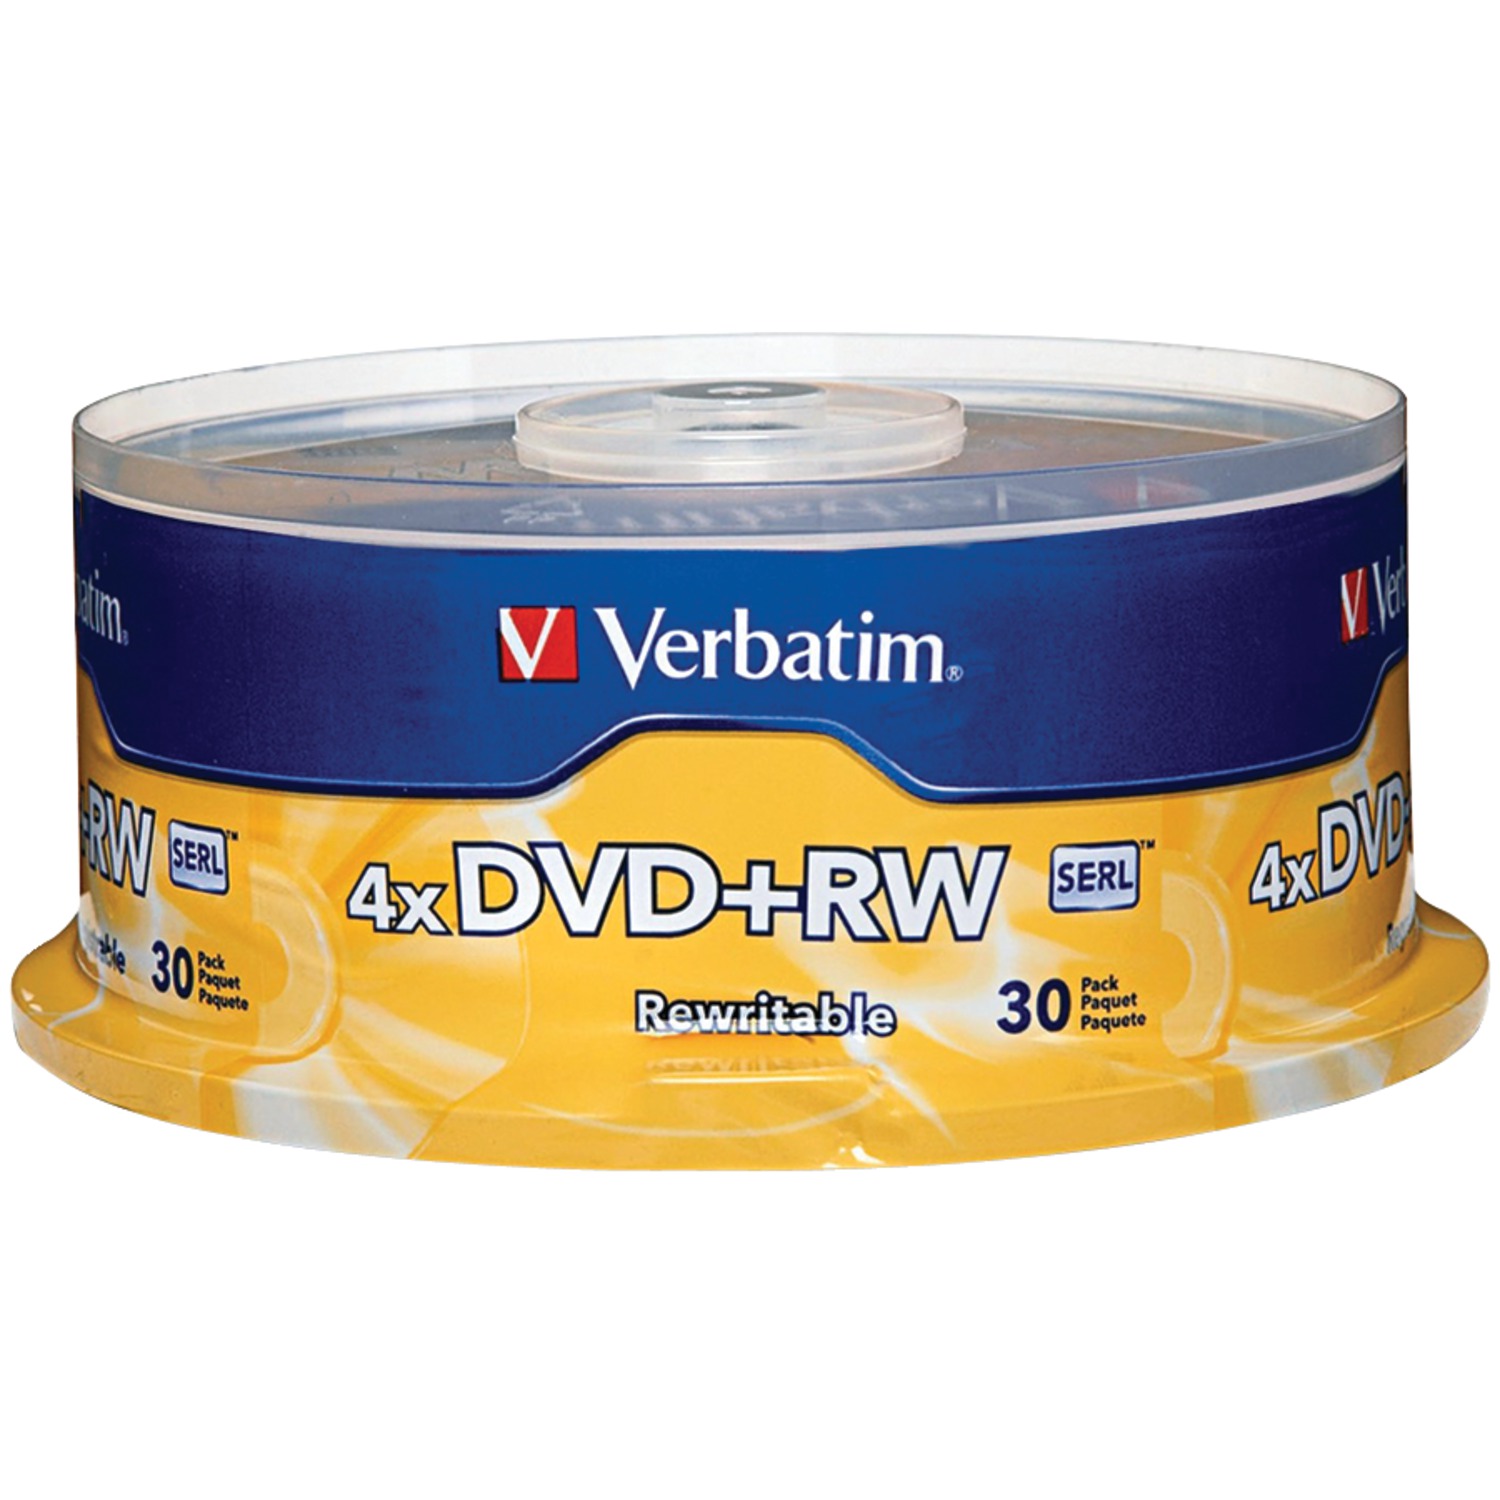 Verbatim, VER94834, 4X DVD+RW Rewritable Discs Spindle, 30, Silver - image 1 of 9